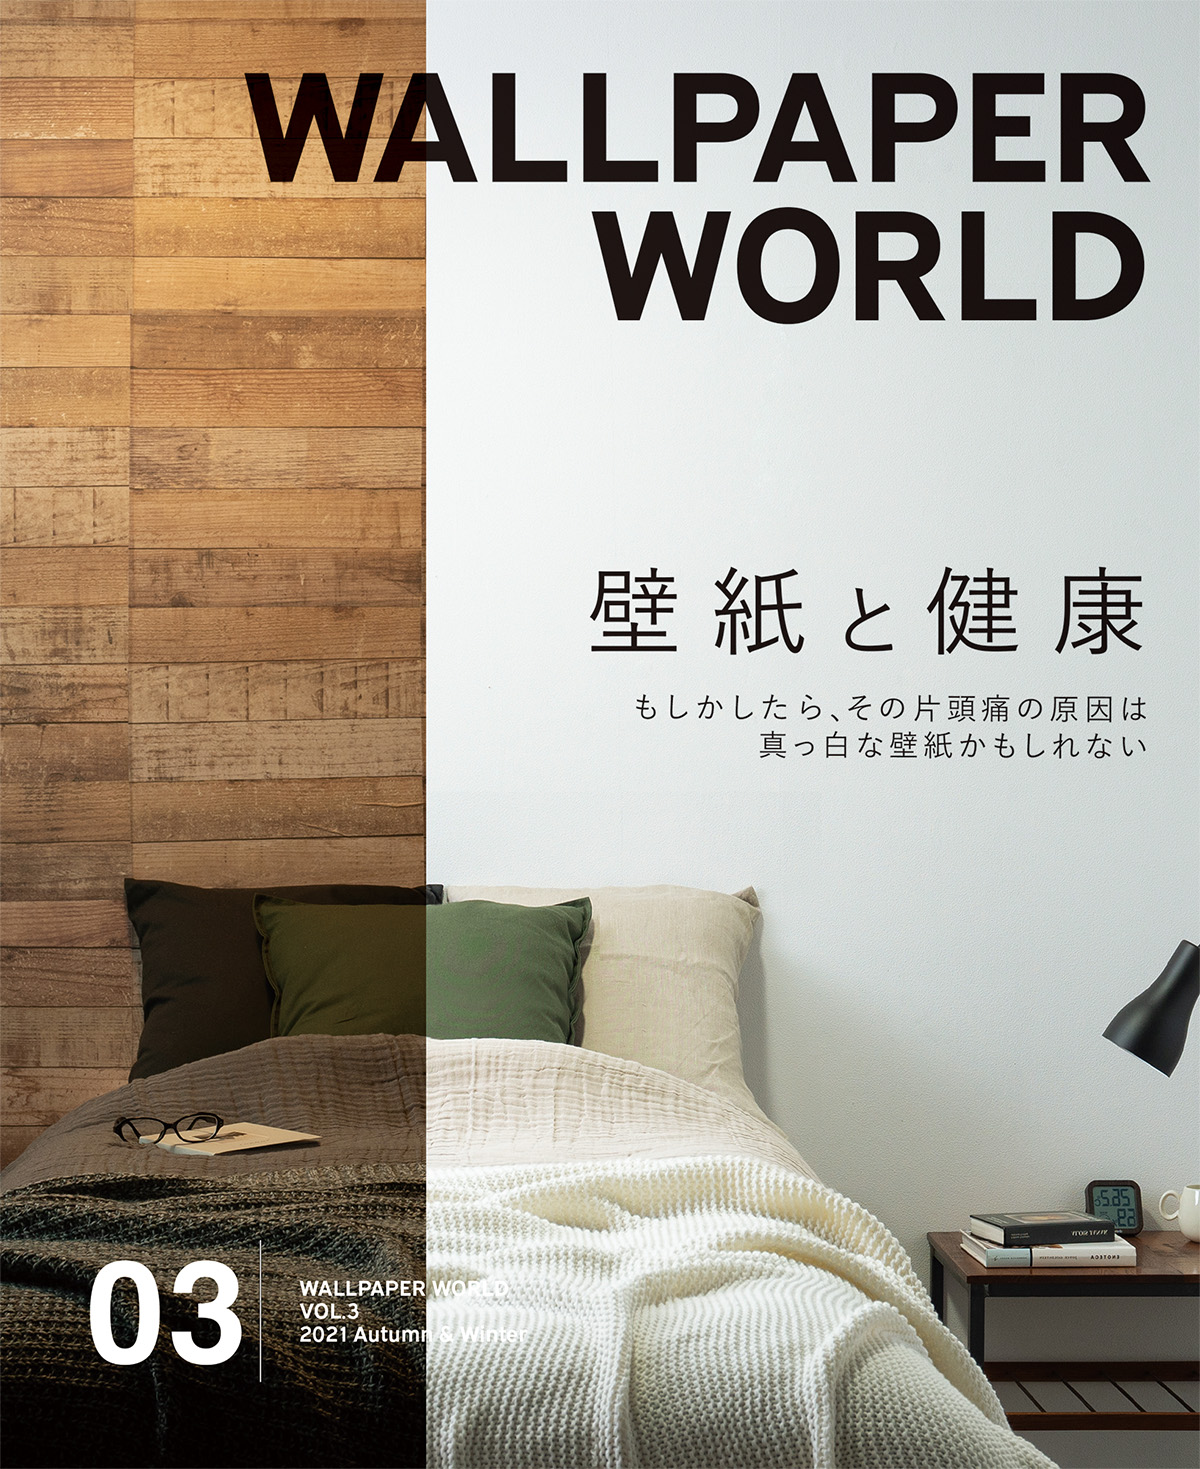 WALLPAPER WORLD VOL.3の商品画像